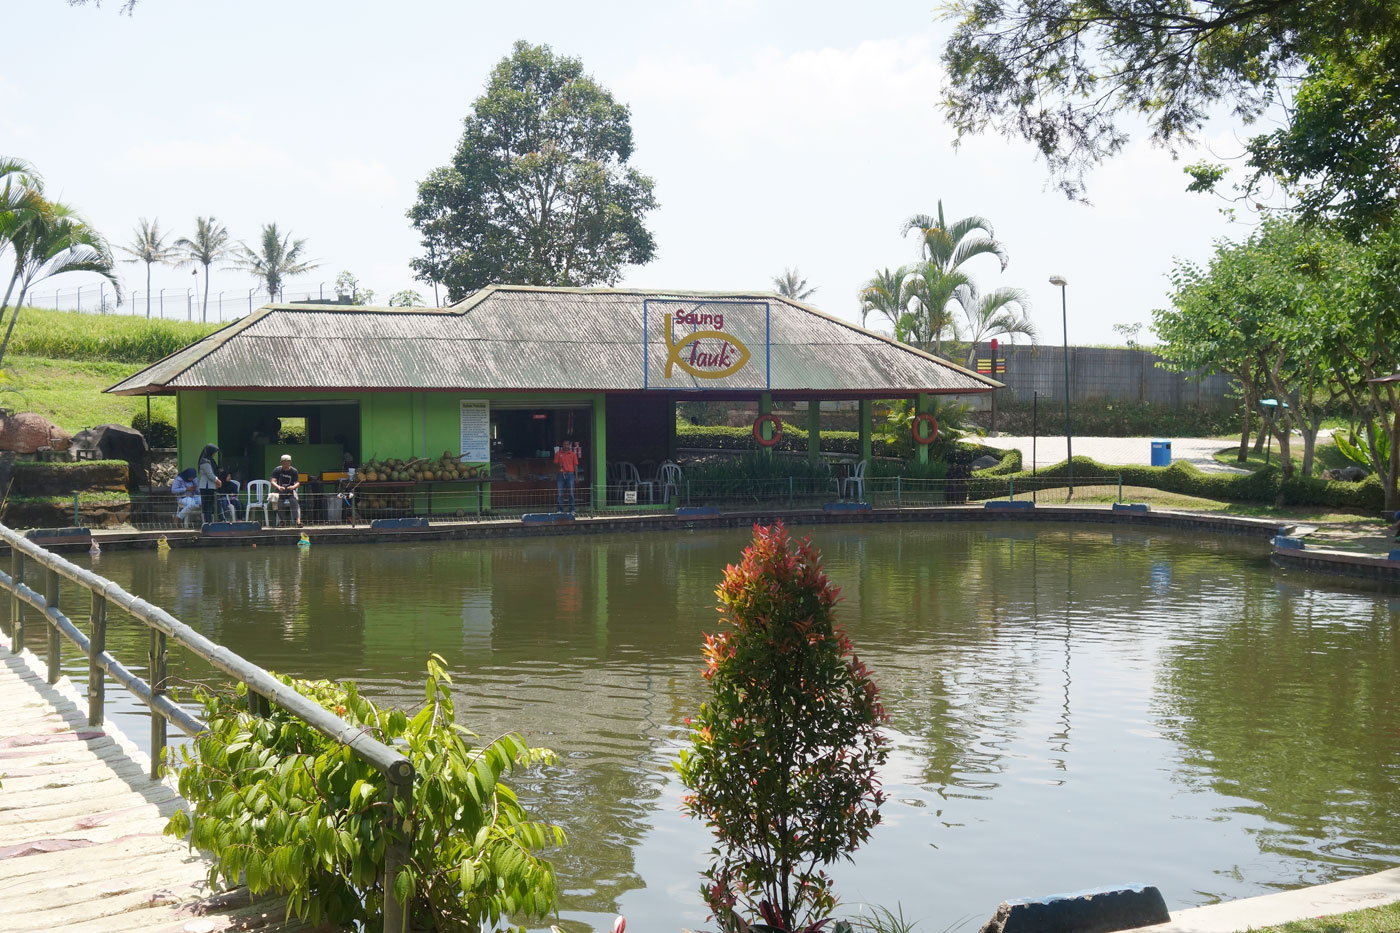 Taman Bunga Nusantara, Cianjur